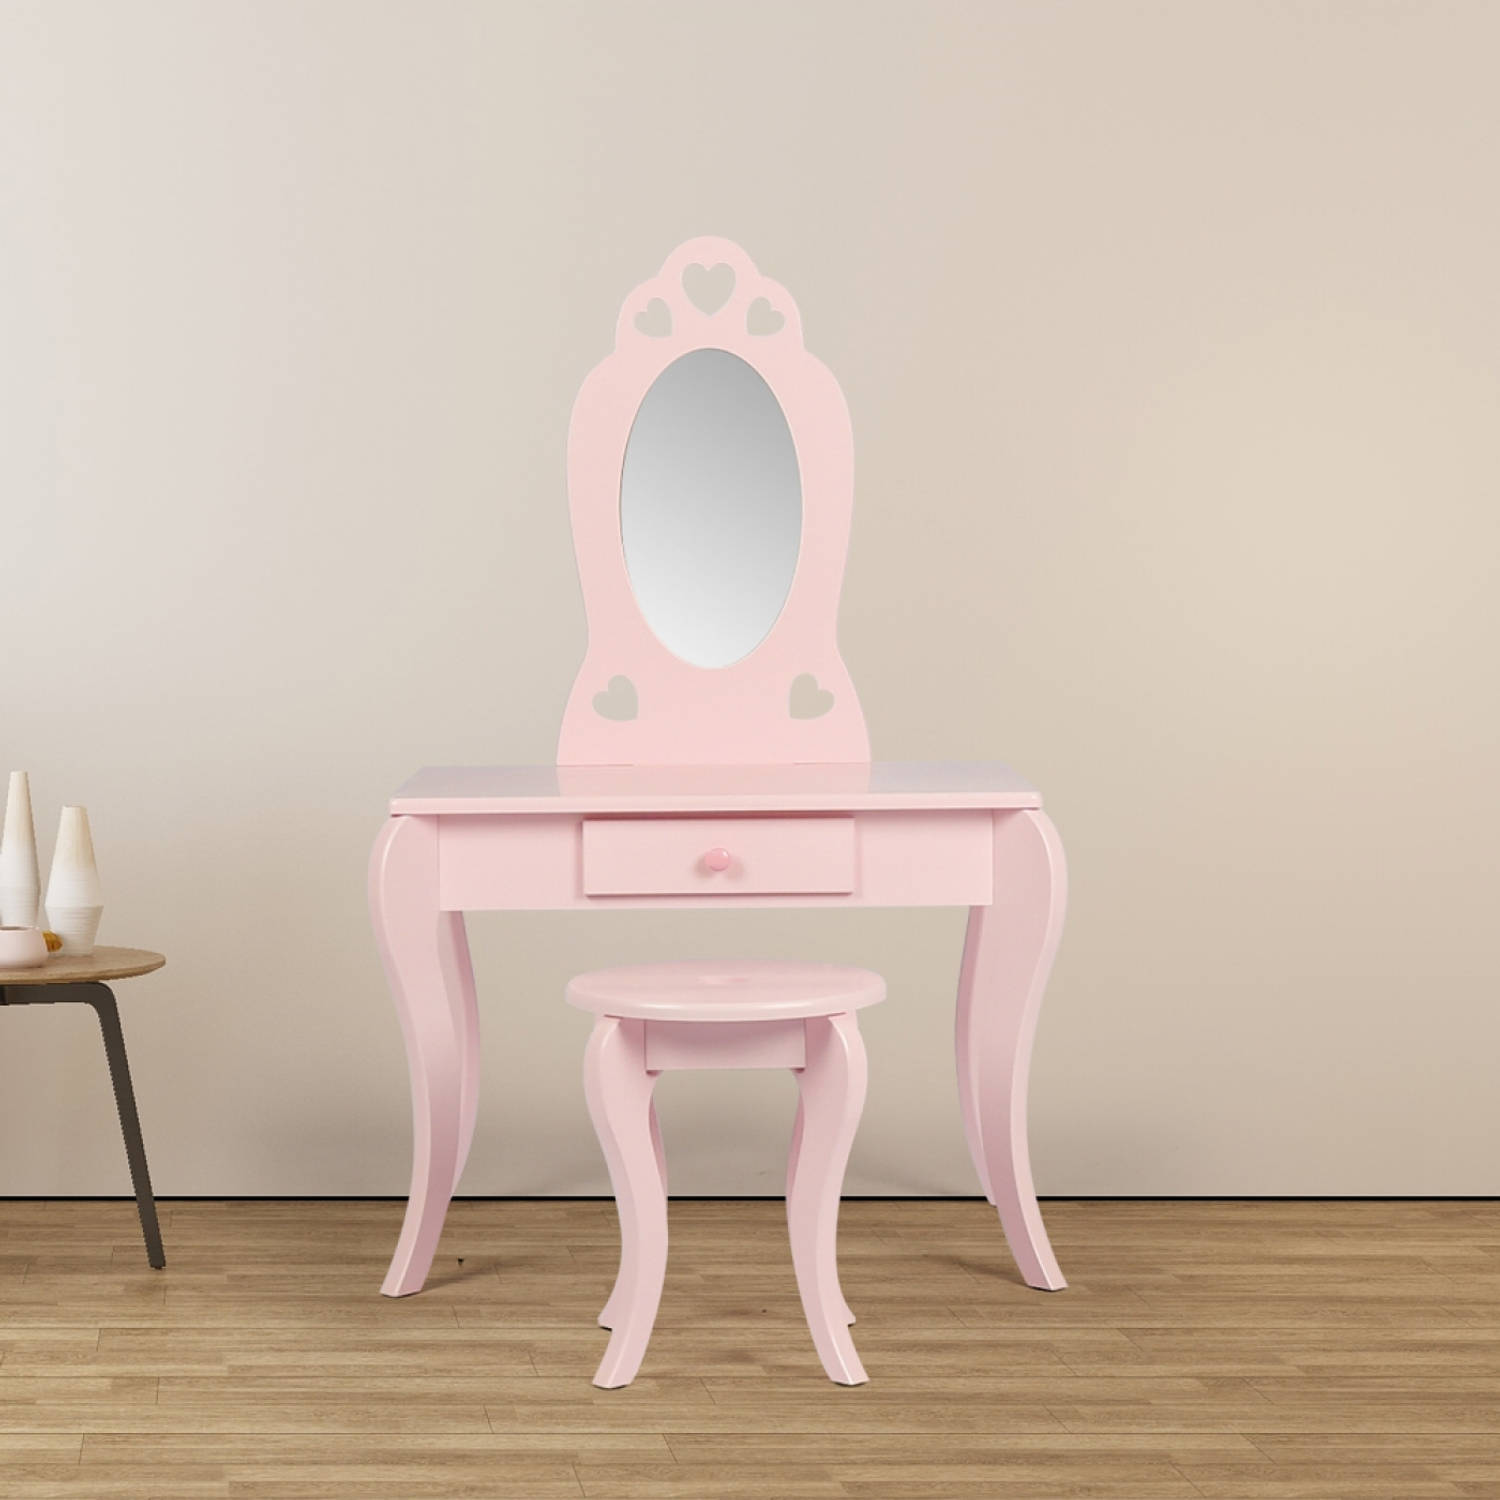 Kaptafel make visagie tafel hartje design kinderkamer meisje met krukje roze | Blokker